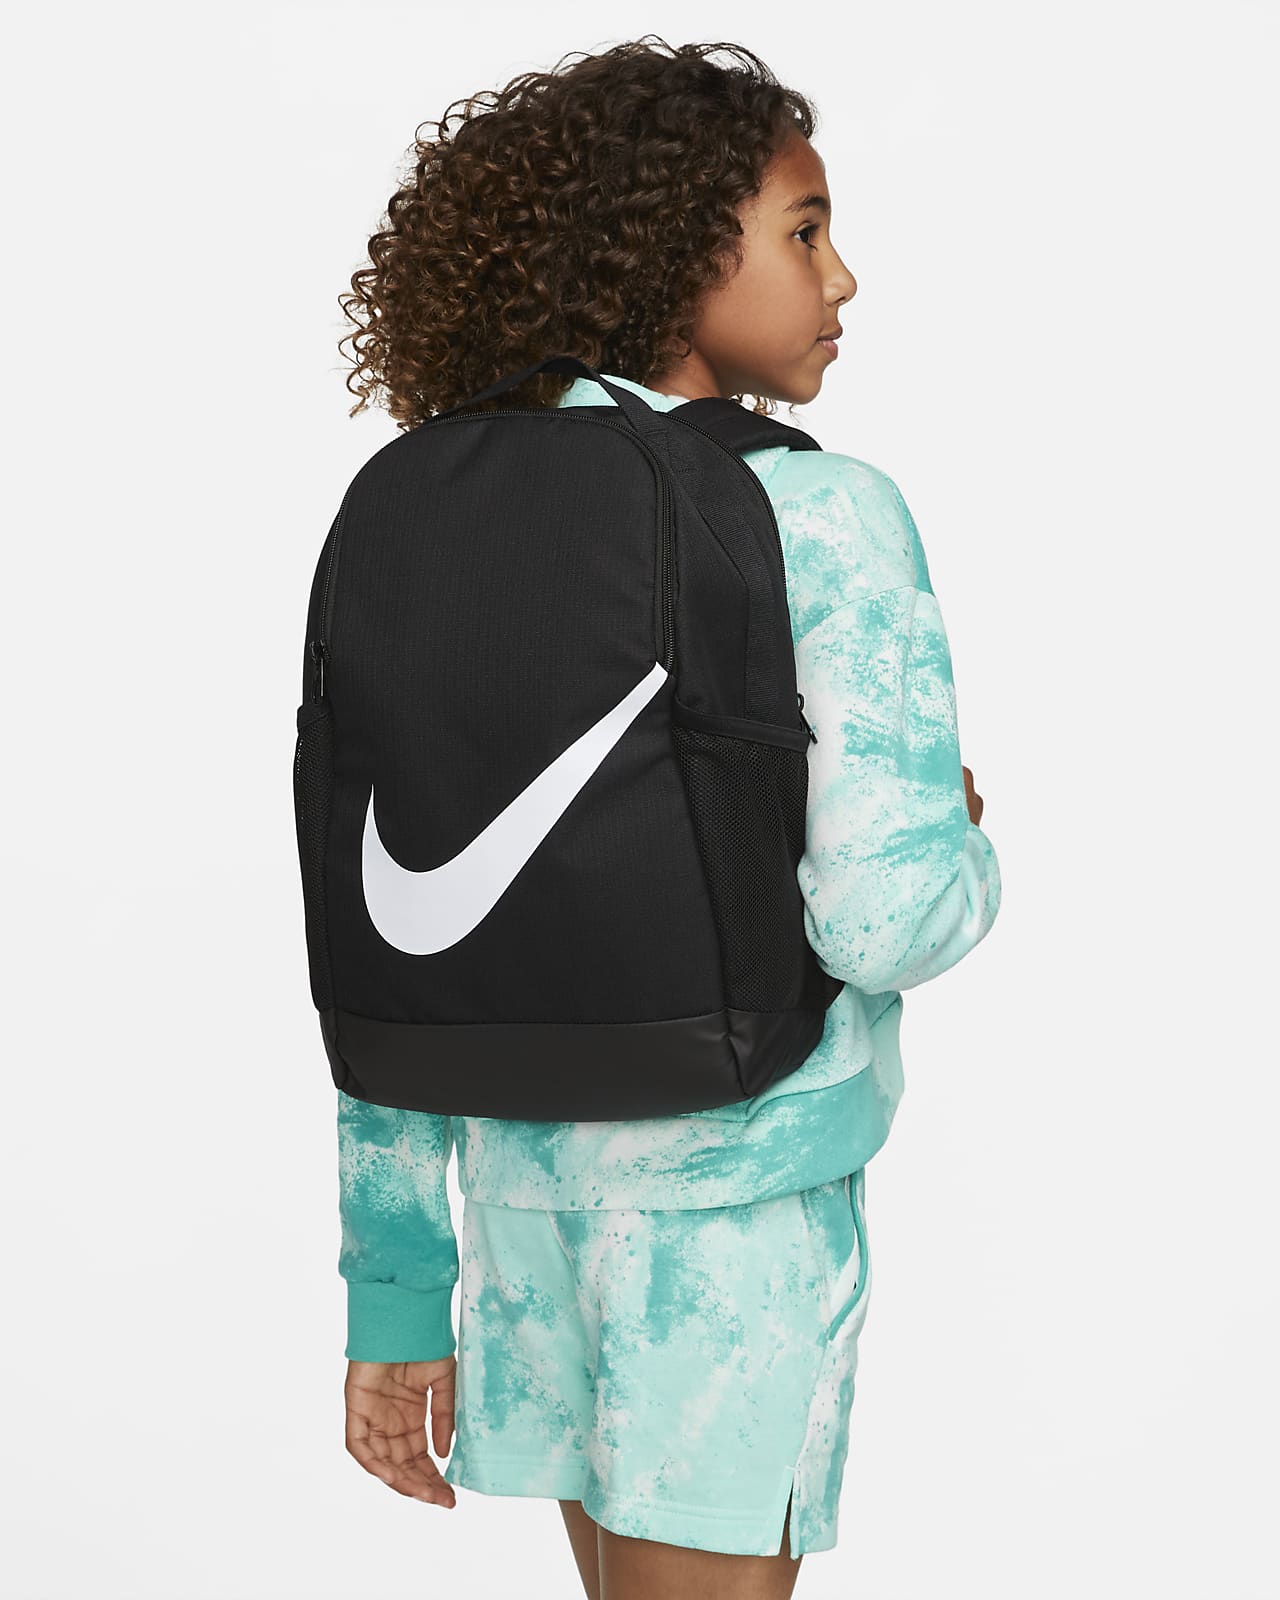 Ryggsäck Nike Brasilia för barn (18L)